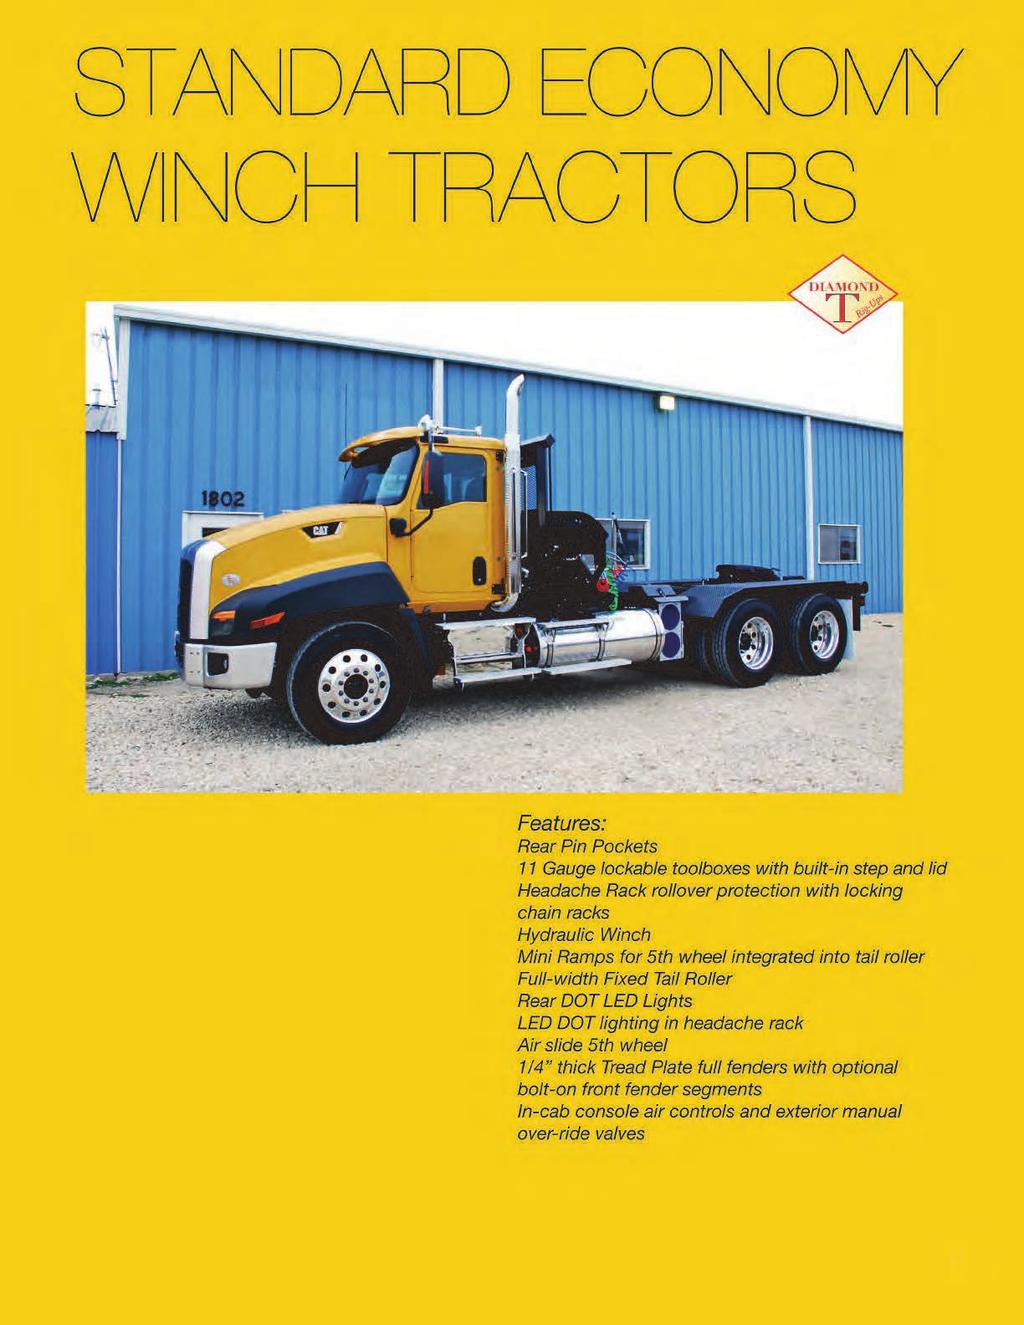 Lonestar s Standard Economy Winch Tractors are specifically designed to move